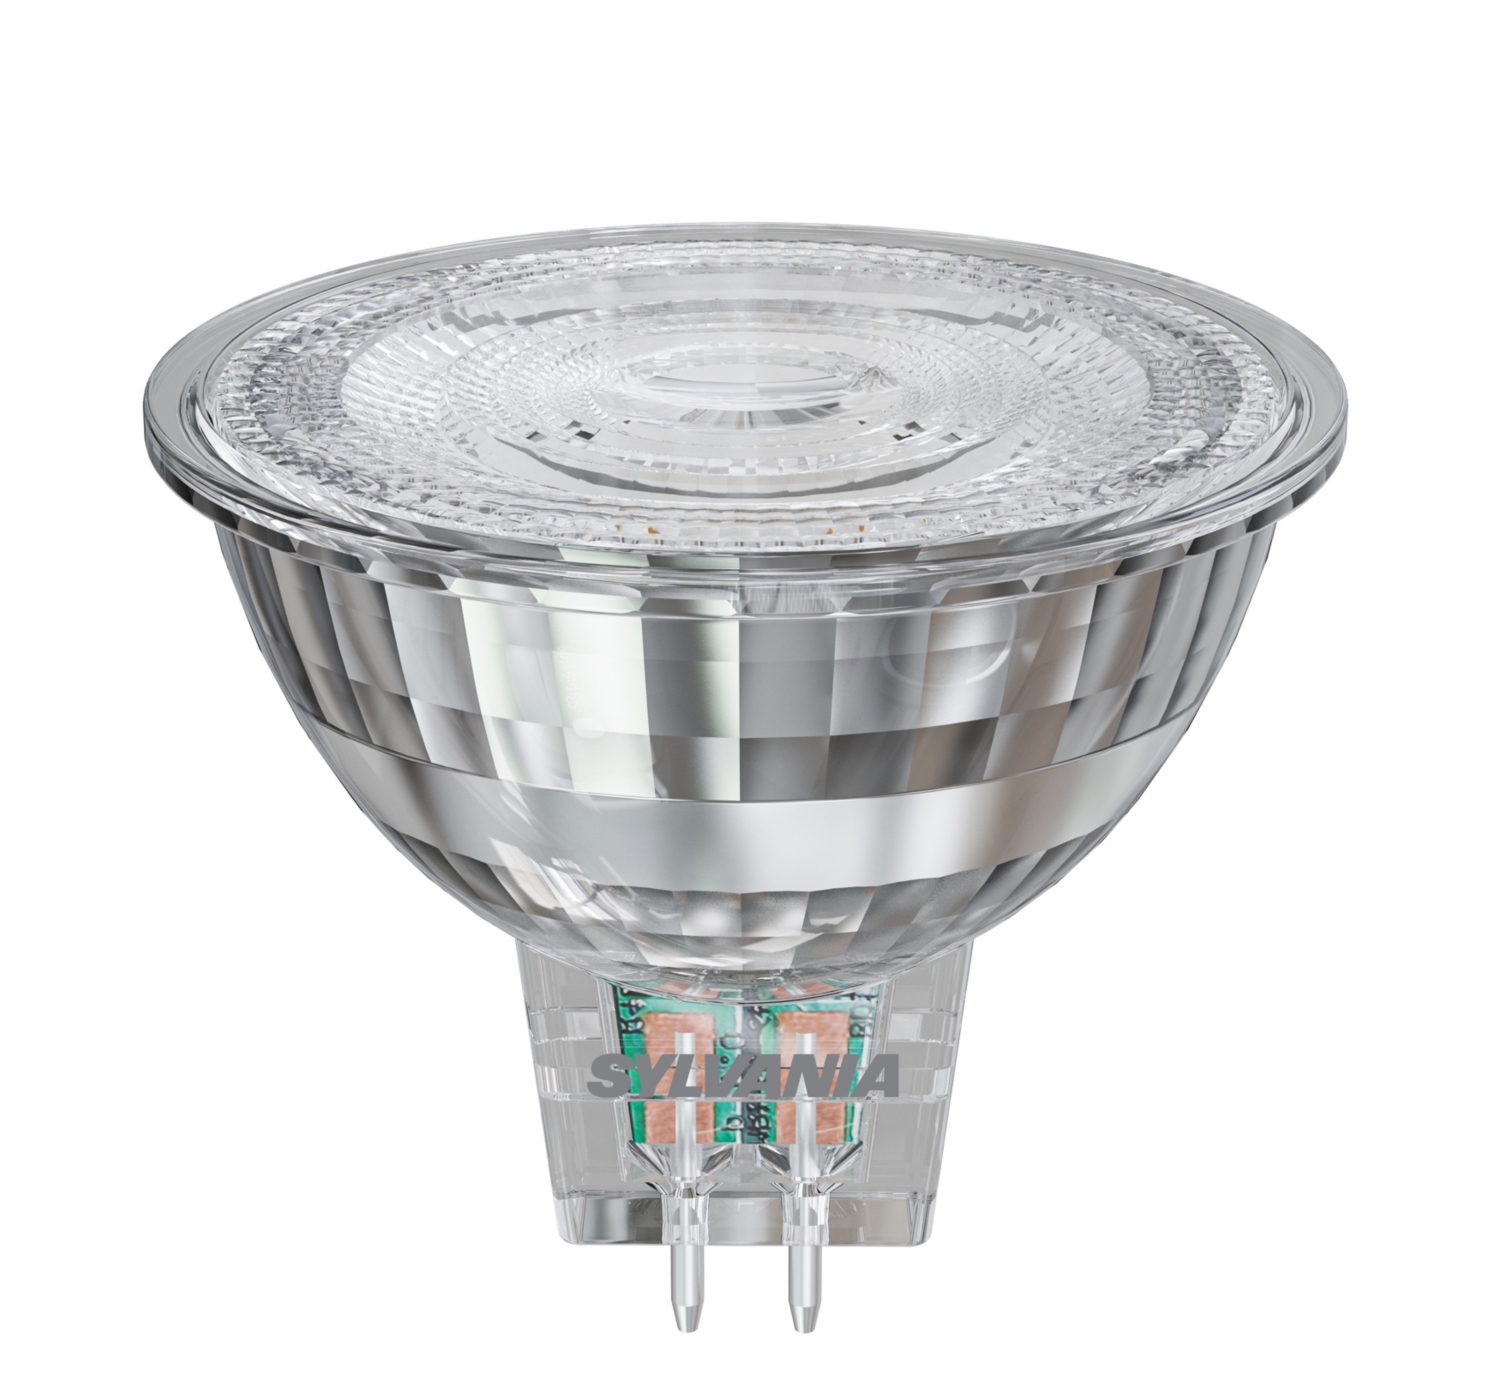  Lampe LED RefLED Superia Retro MR16 36° 